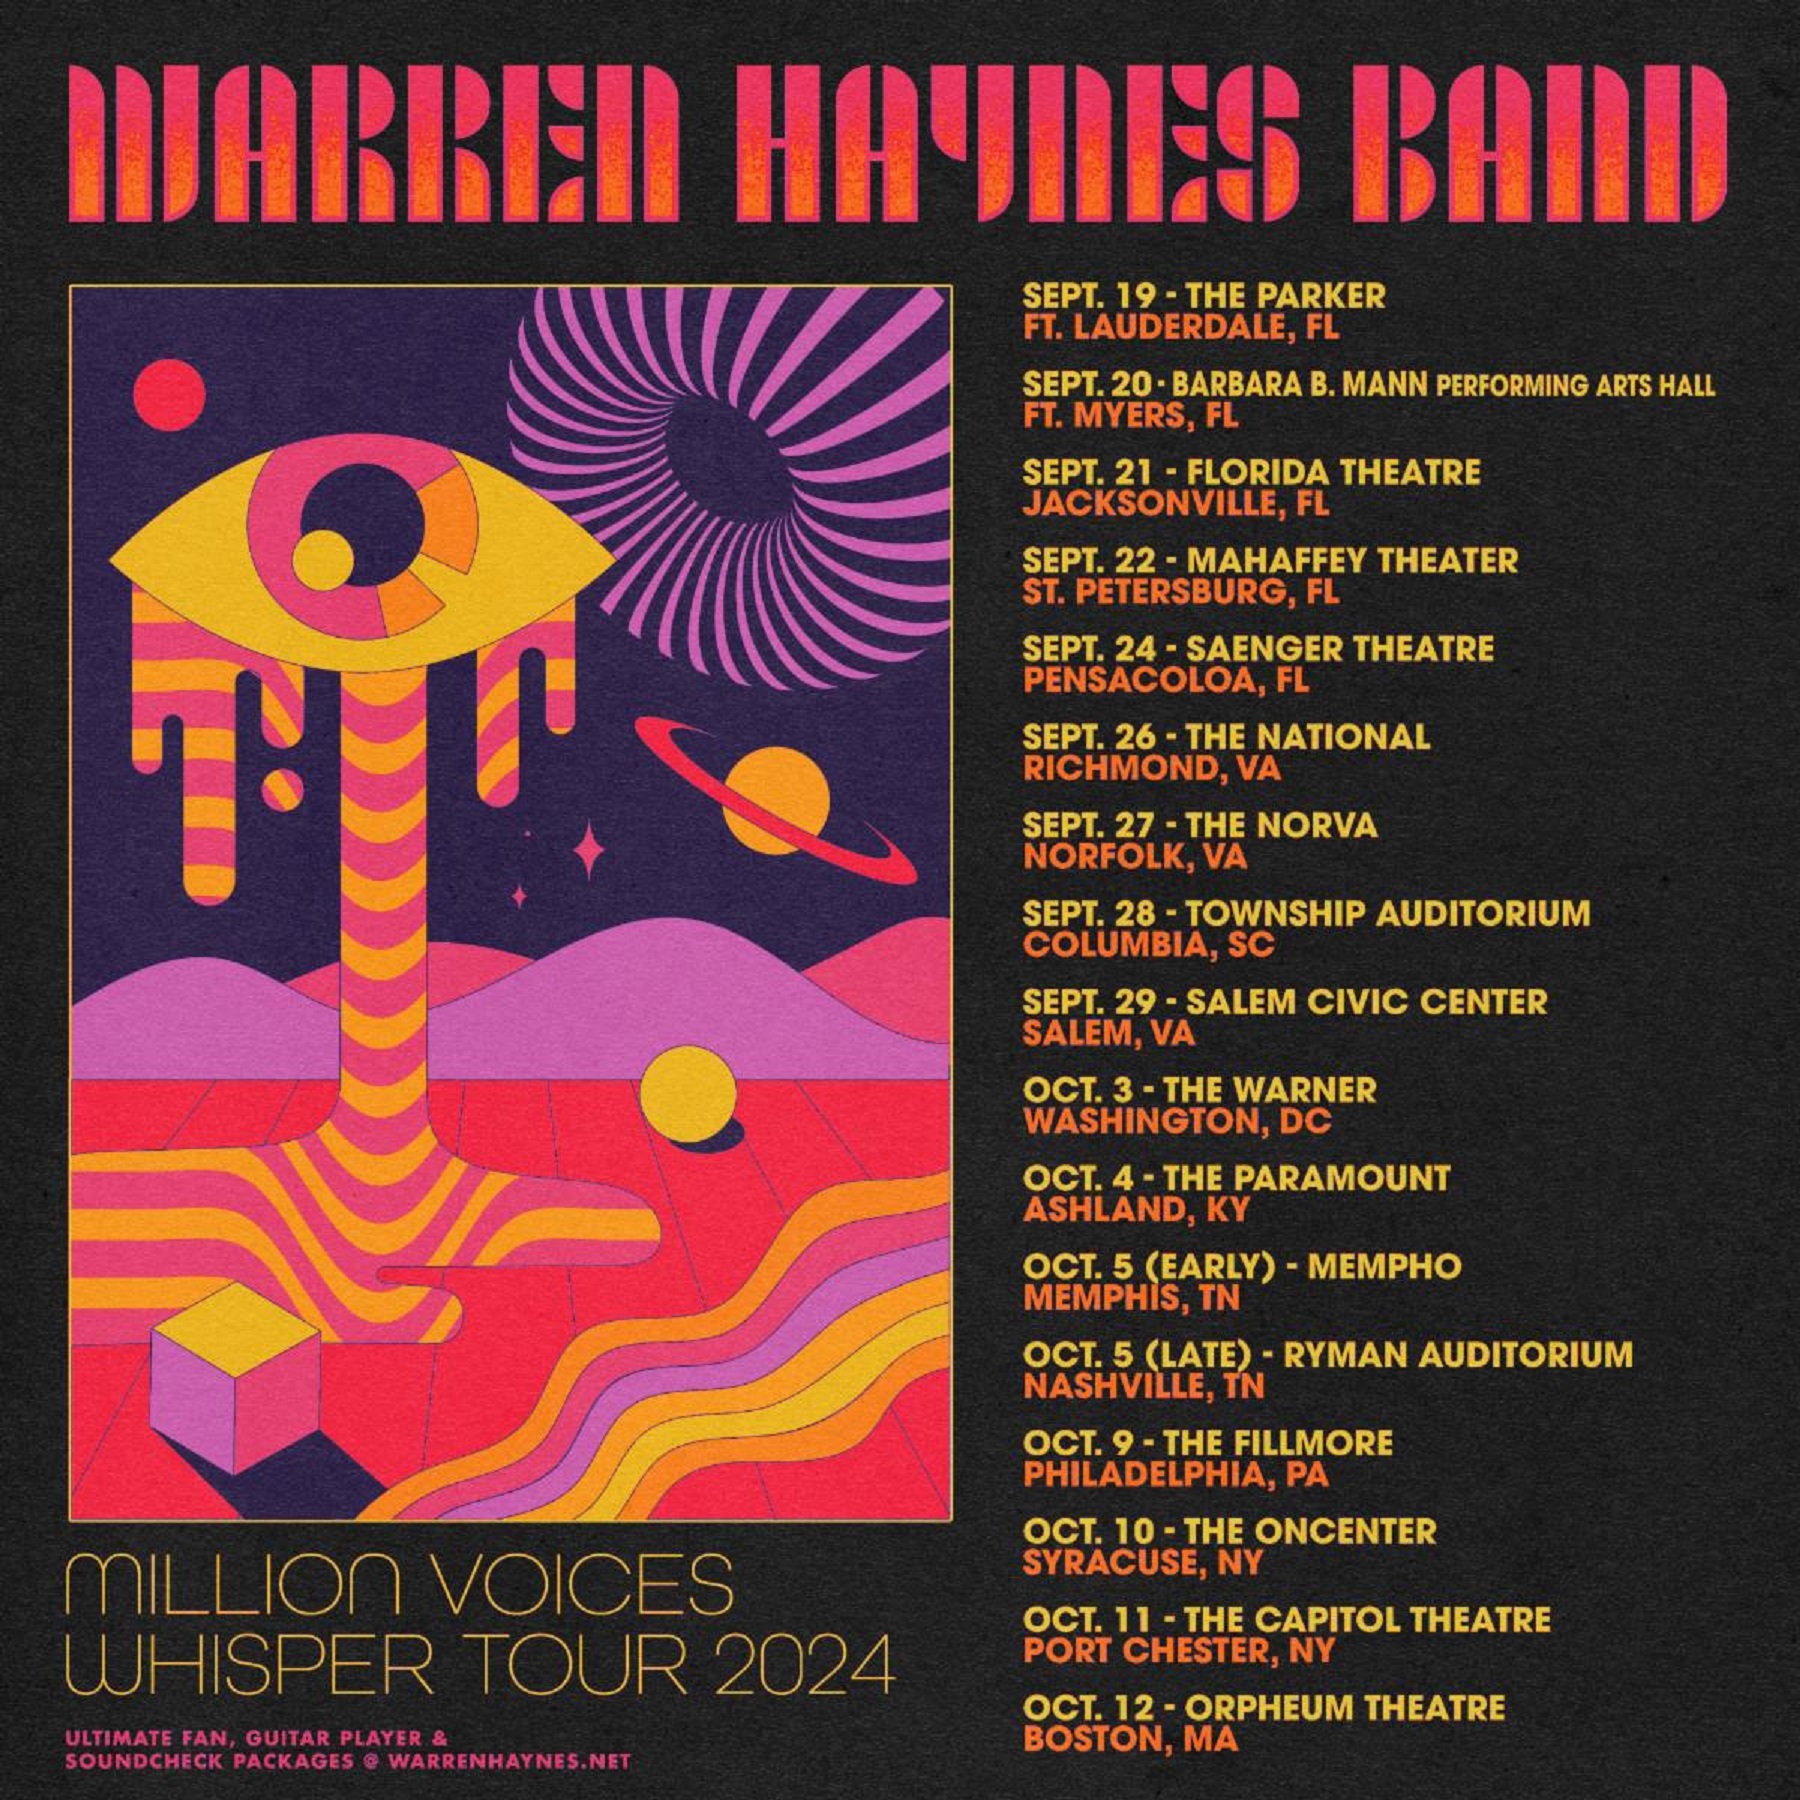 Warren Haynes Band Announces Fall Headlining Million Voices Whisper Tour